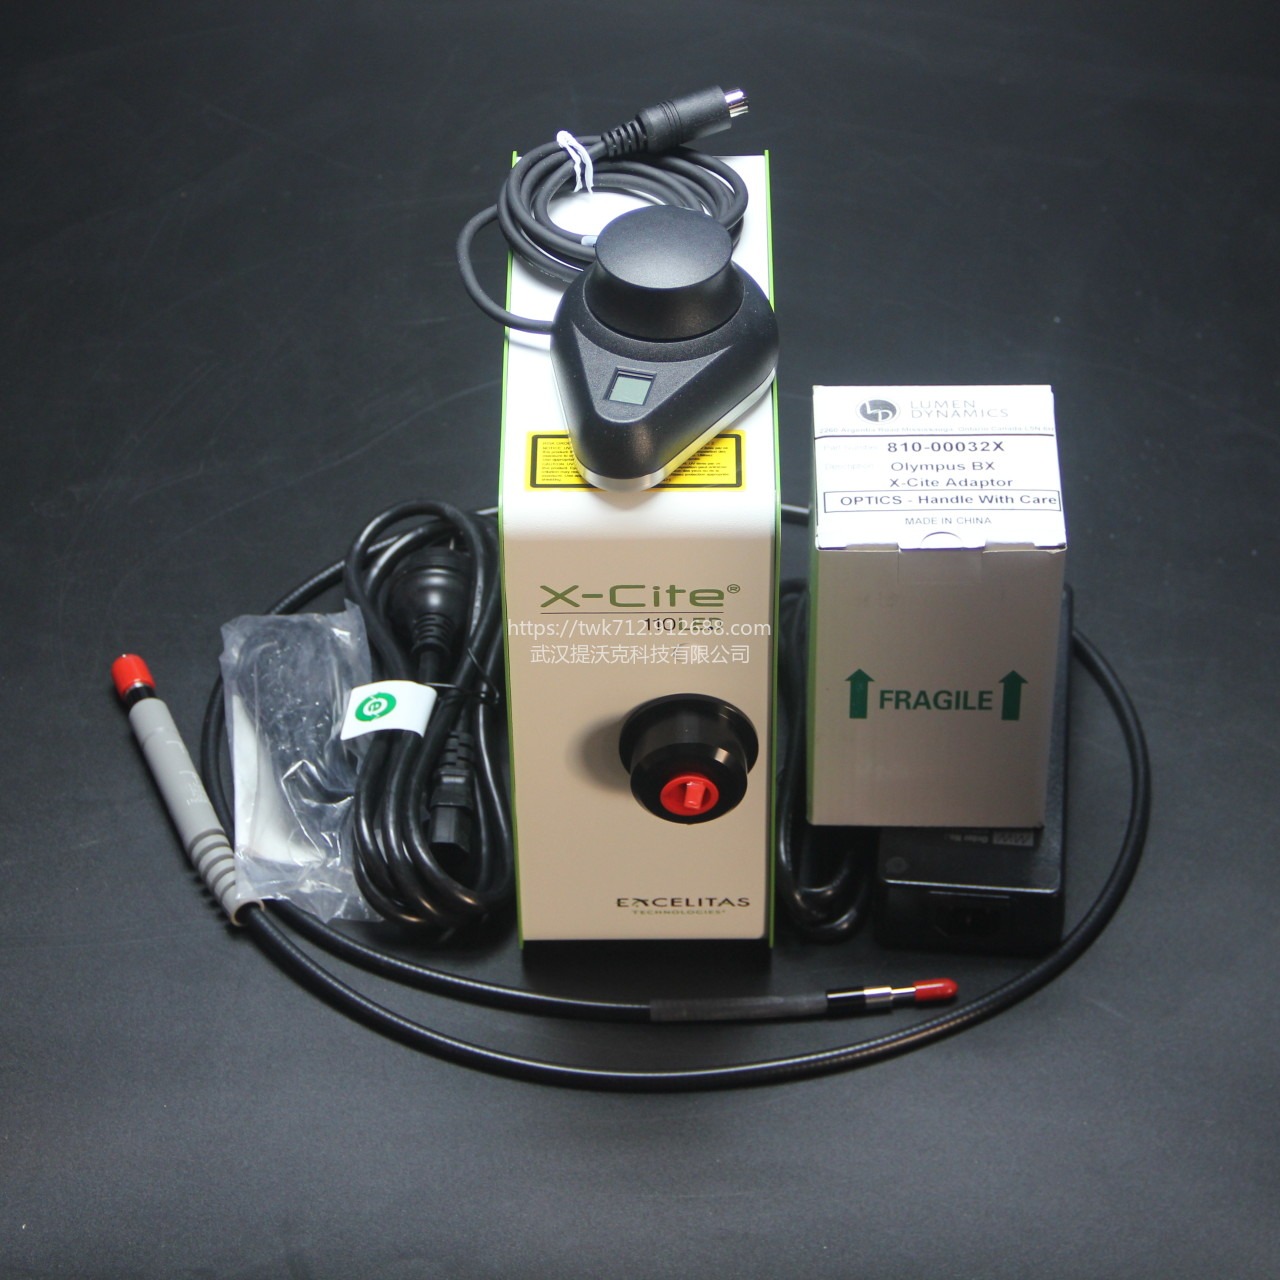 Excelitas 宽屏照明系统 X-Cite 110LED显微镜光源系统 荧光光源